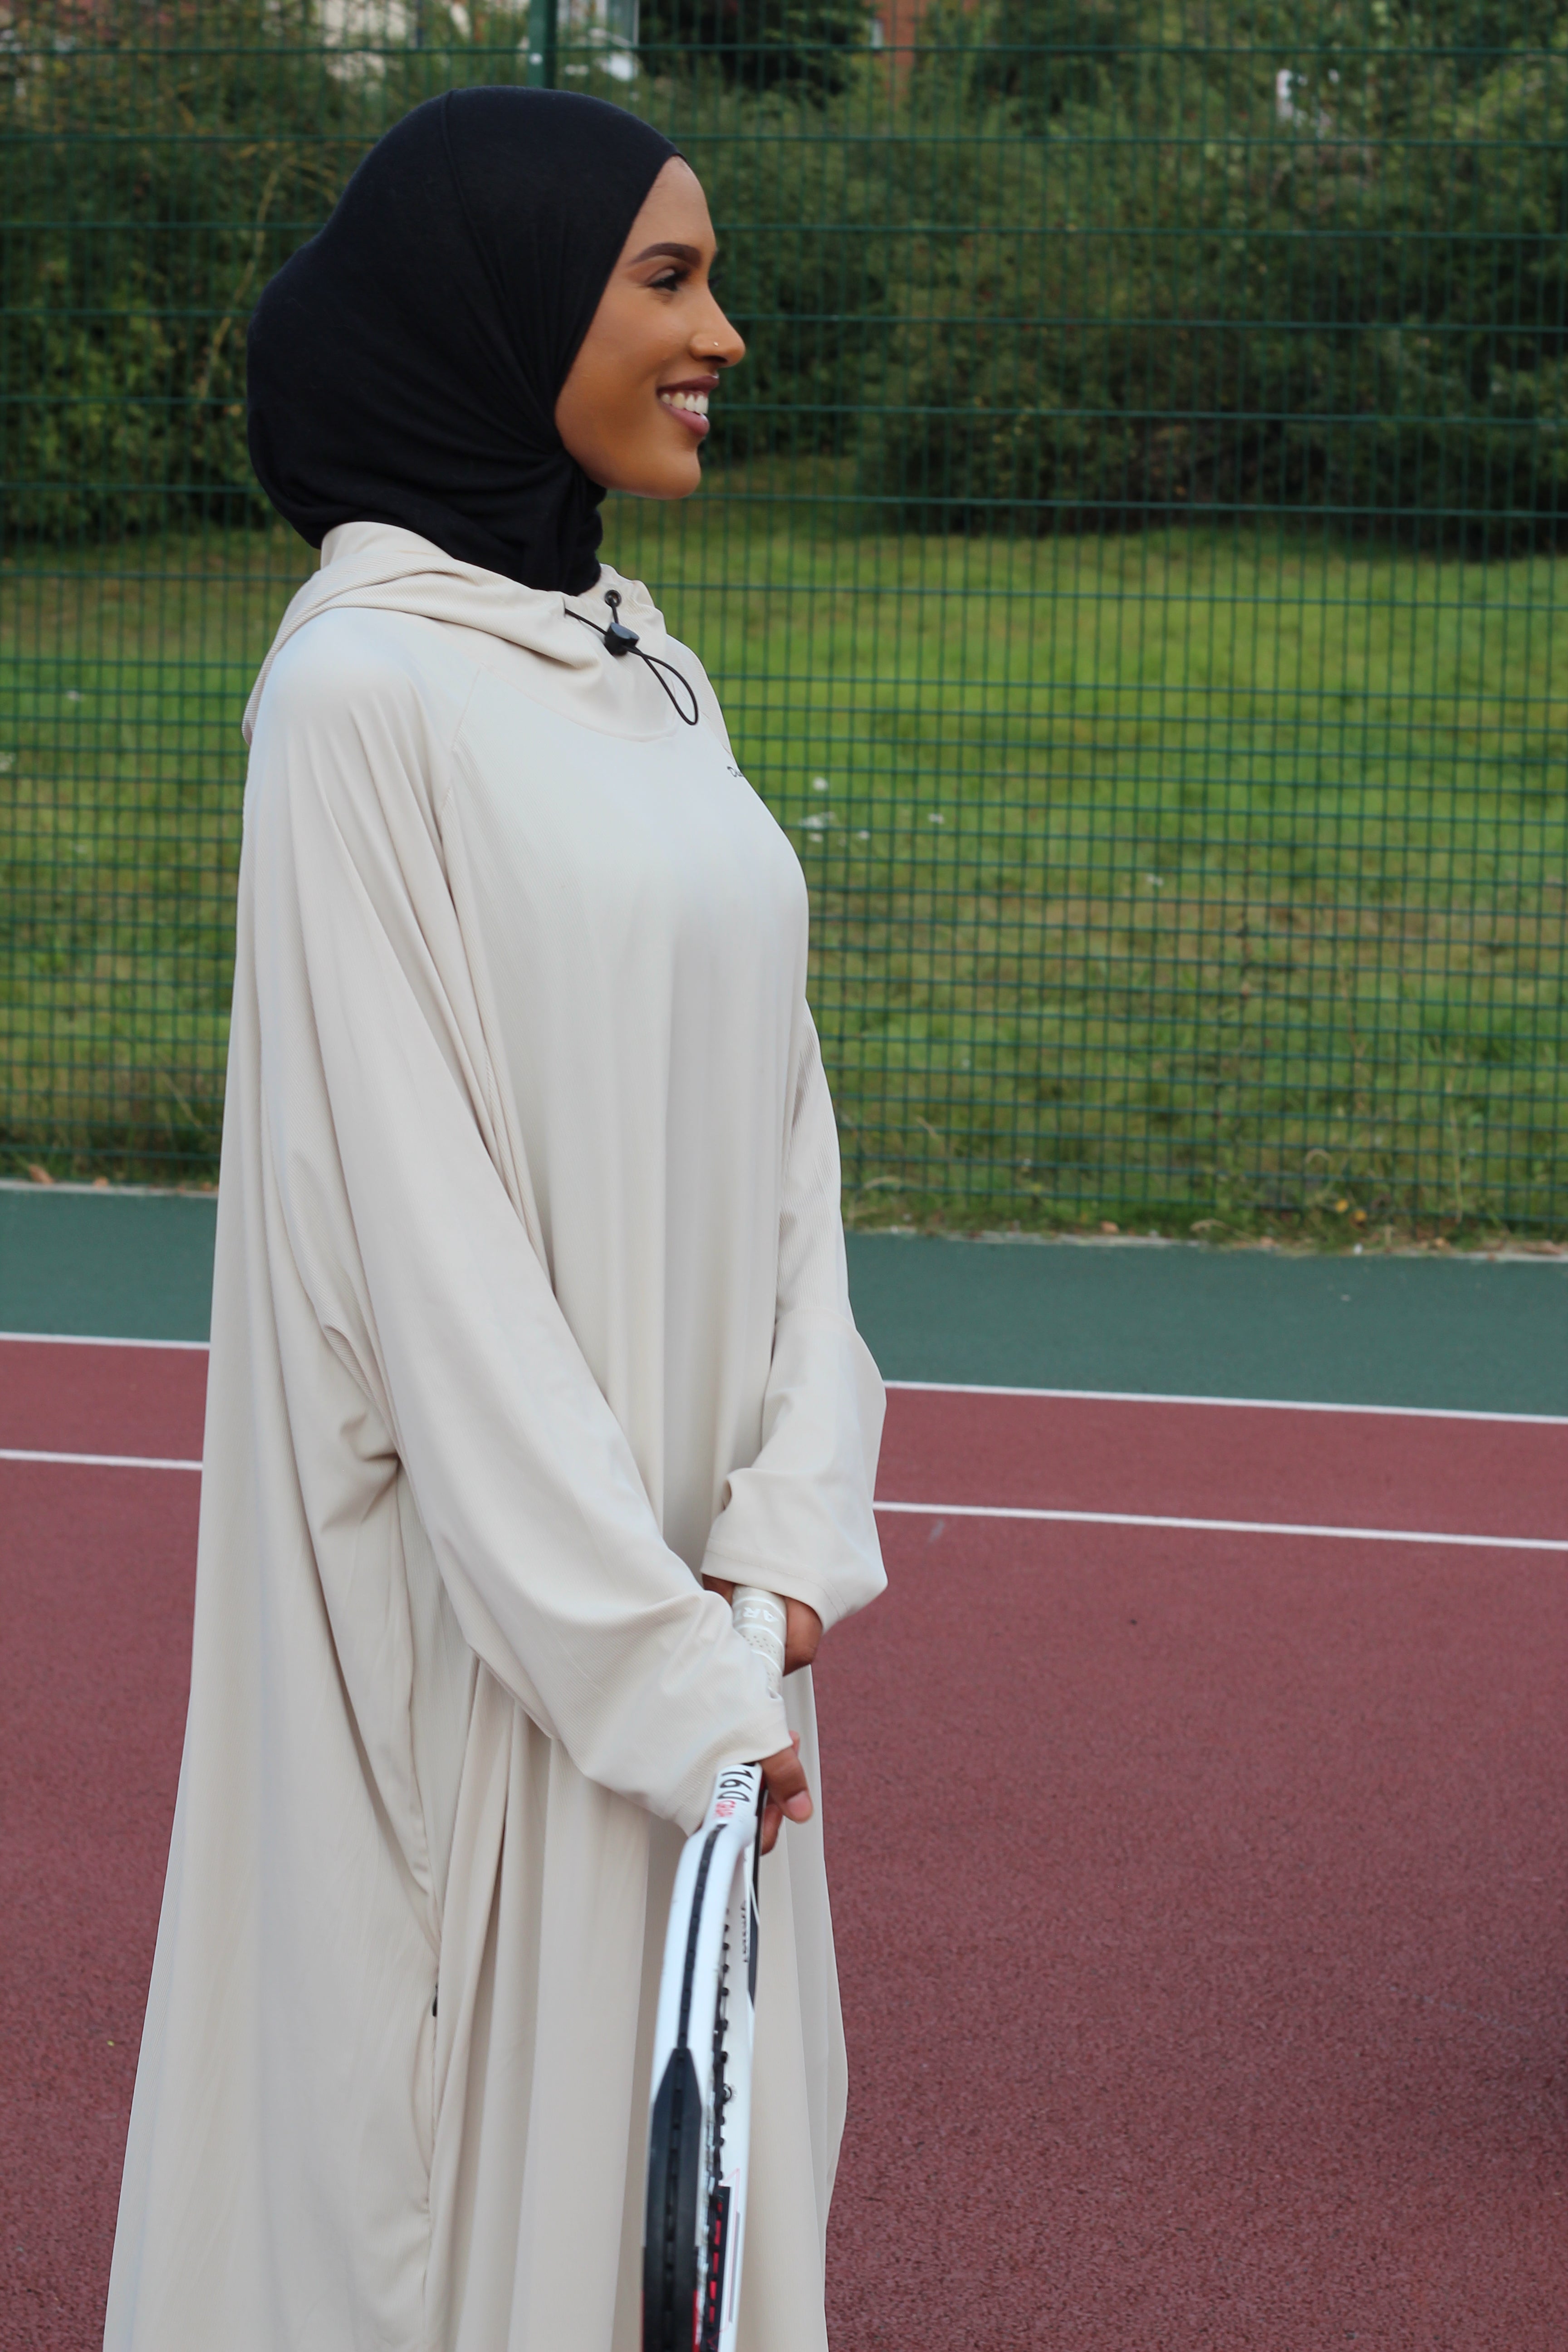 The Beige Active Abaya - Modest Activewear/Swimwear Abaya